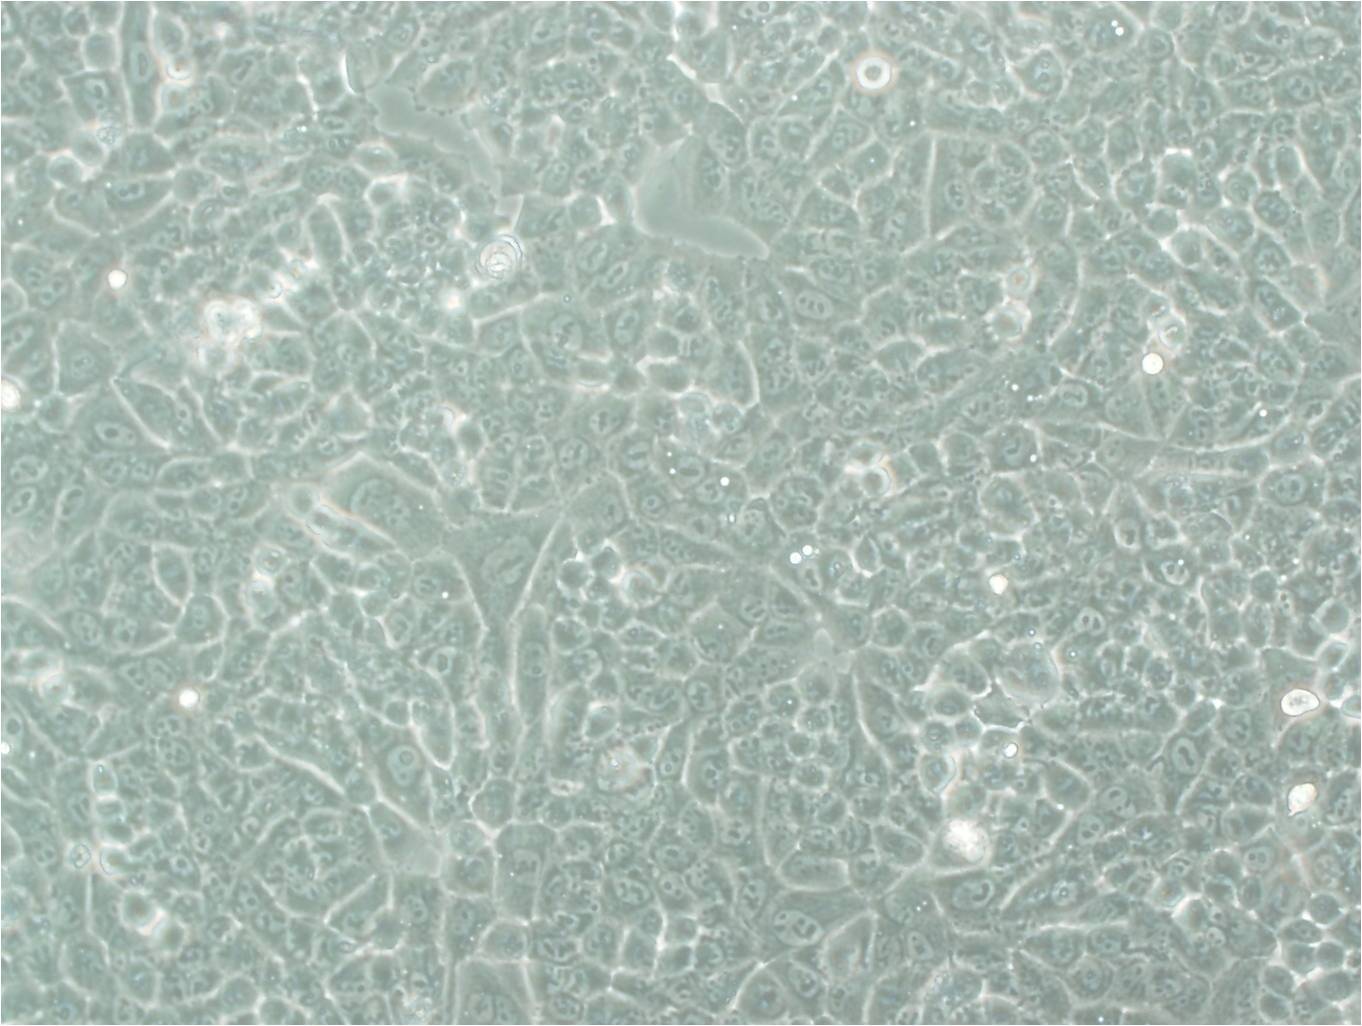 SW626 Fresh Cells|人卵巢癌细胞(送STR基因图谱),SW626 Fresh Cells